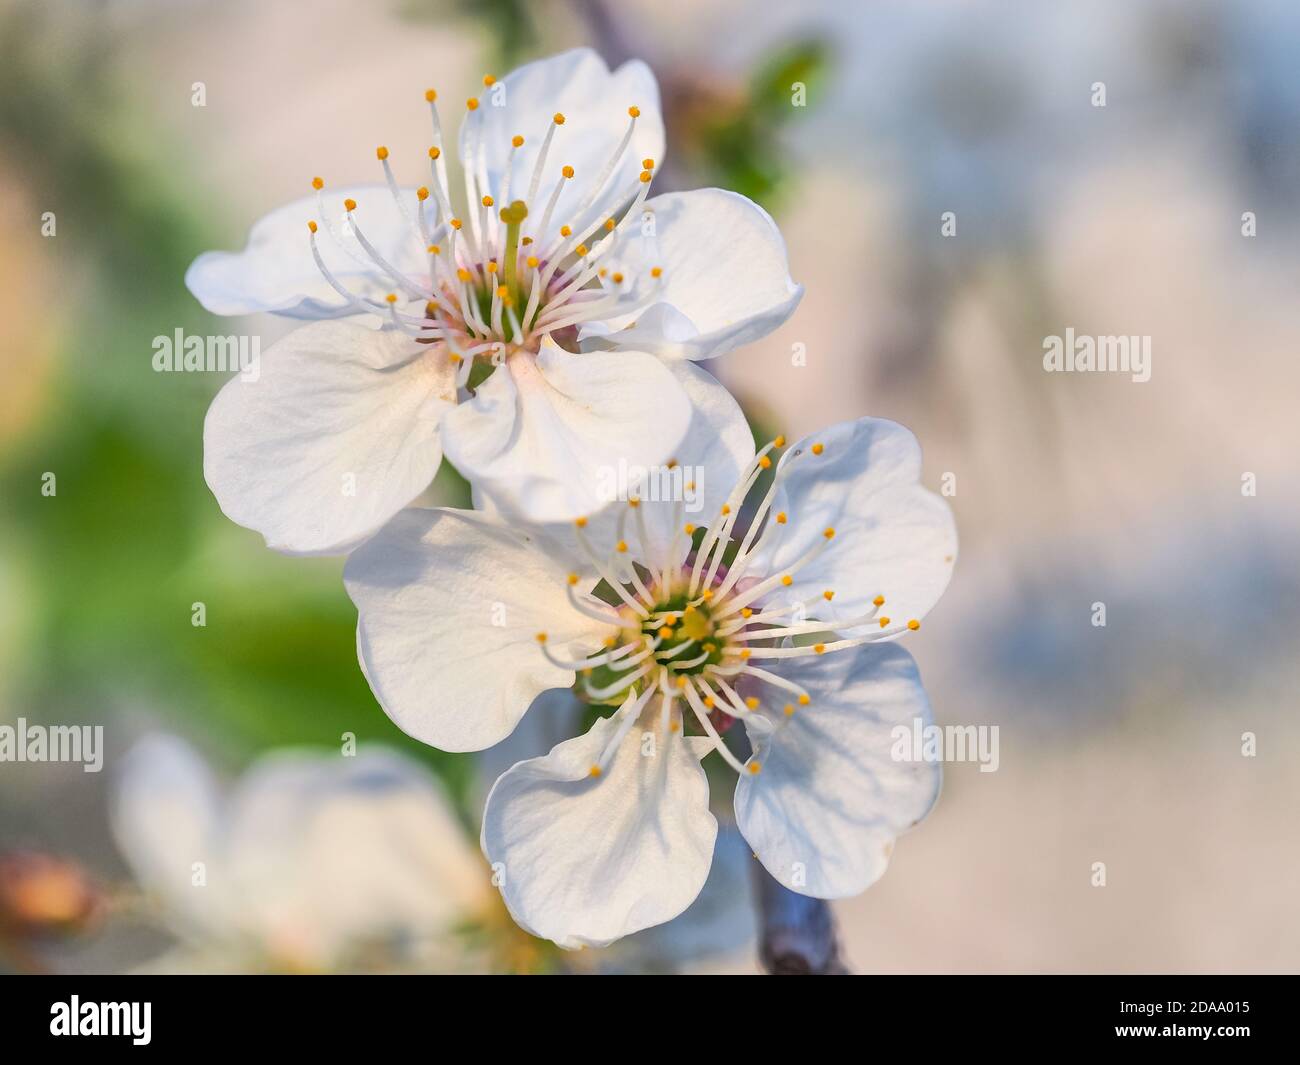 Sweet cherry flowers. White blossoms of Prunus avium in the blurred background. Deciduous, flowering plant in the family Rosaceae, subgenus Cerasus. Stock Photo